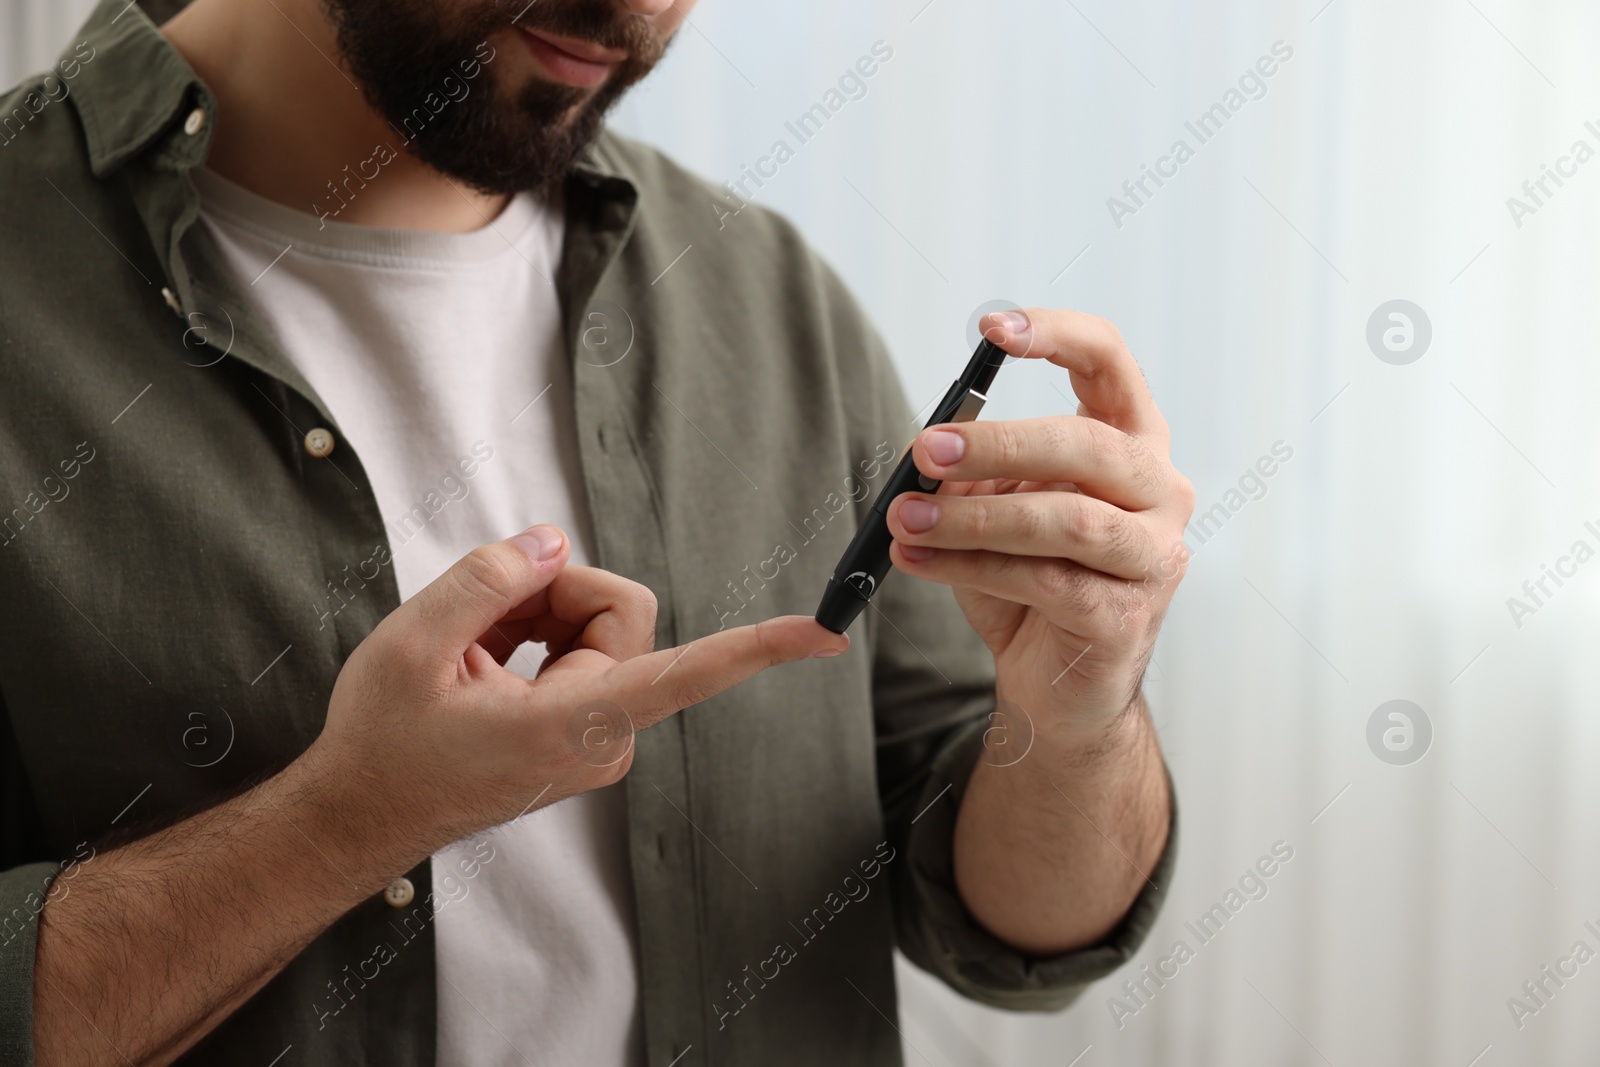 Photo of Diabetes test. Man checking blood sugar level with lancet pen at home, closeup